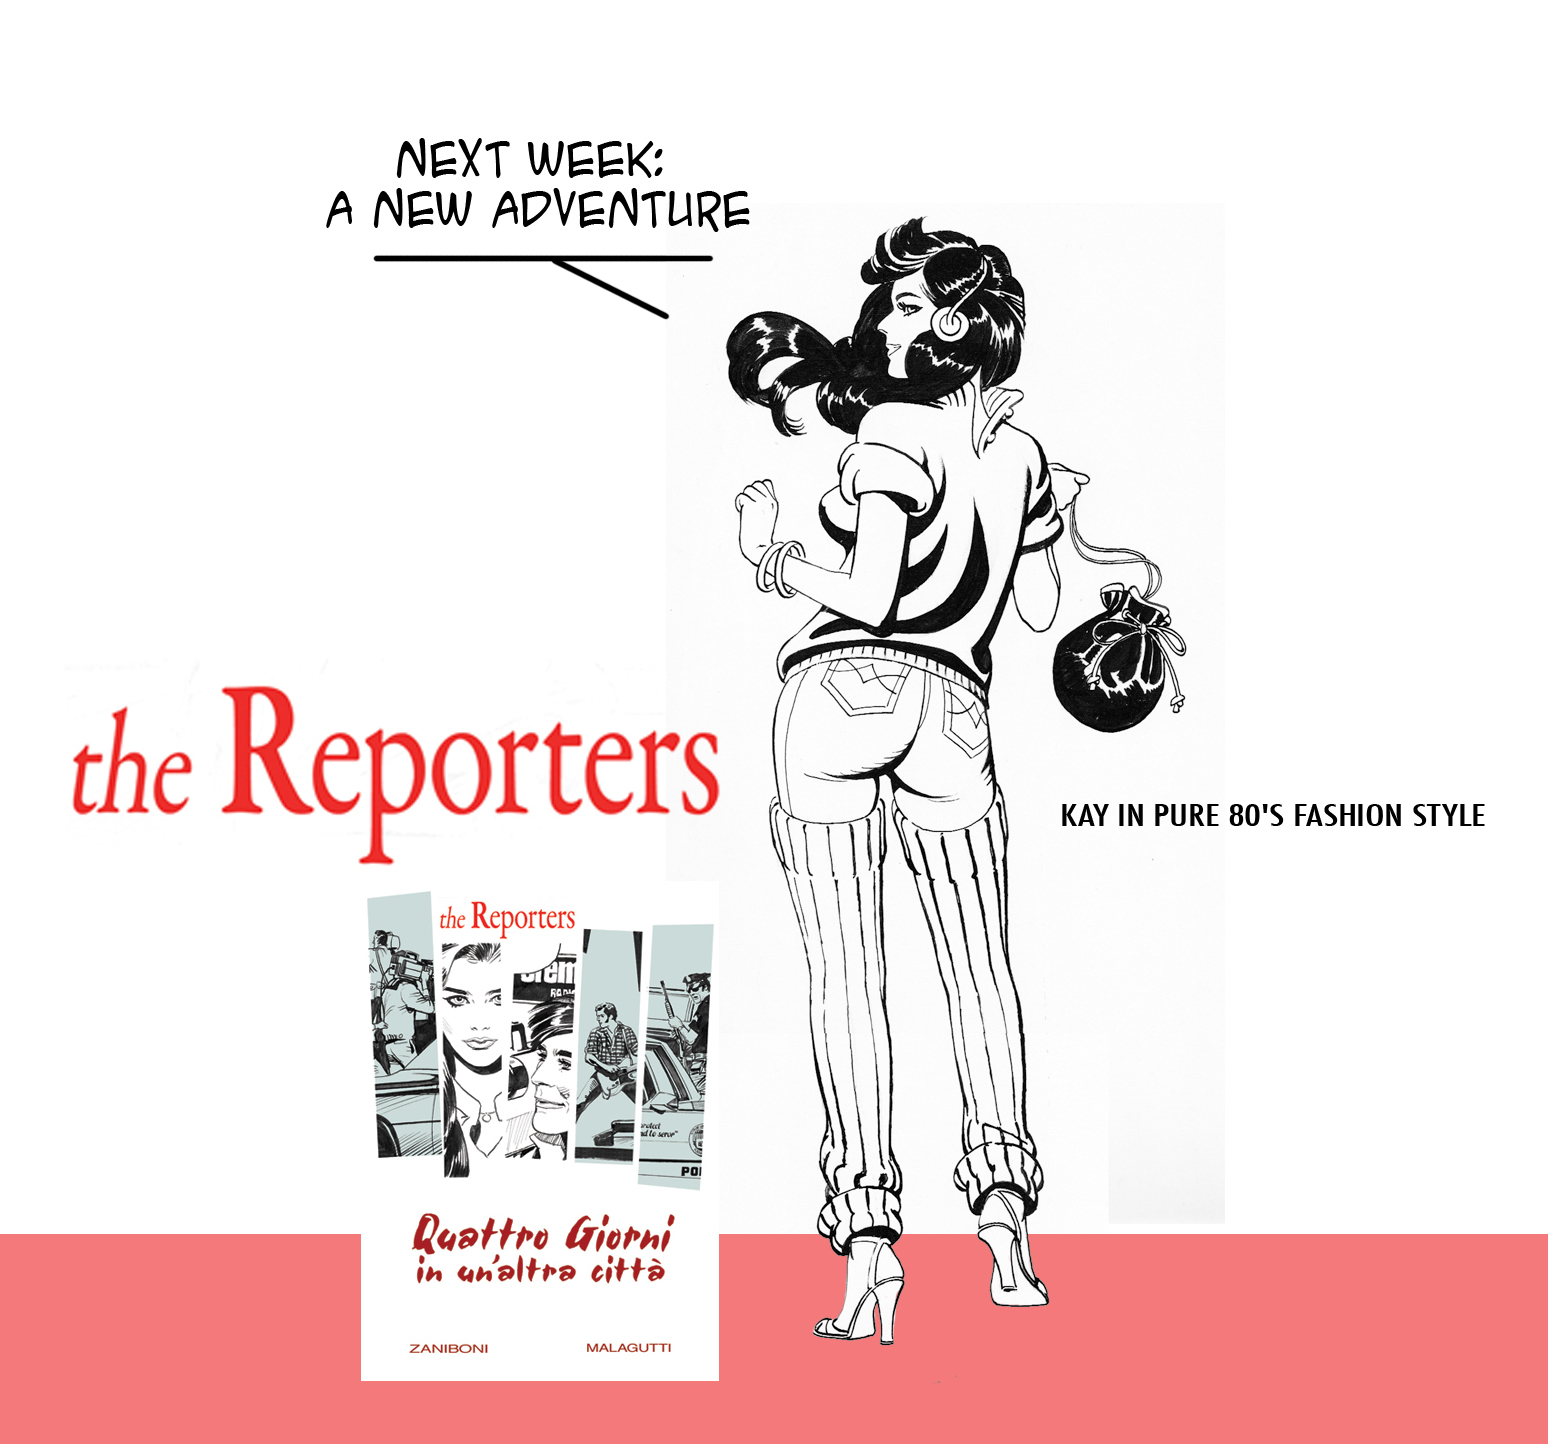 the Reporters new adventure